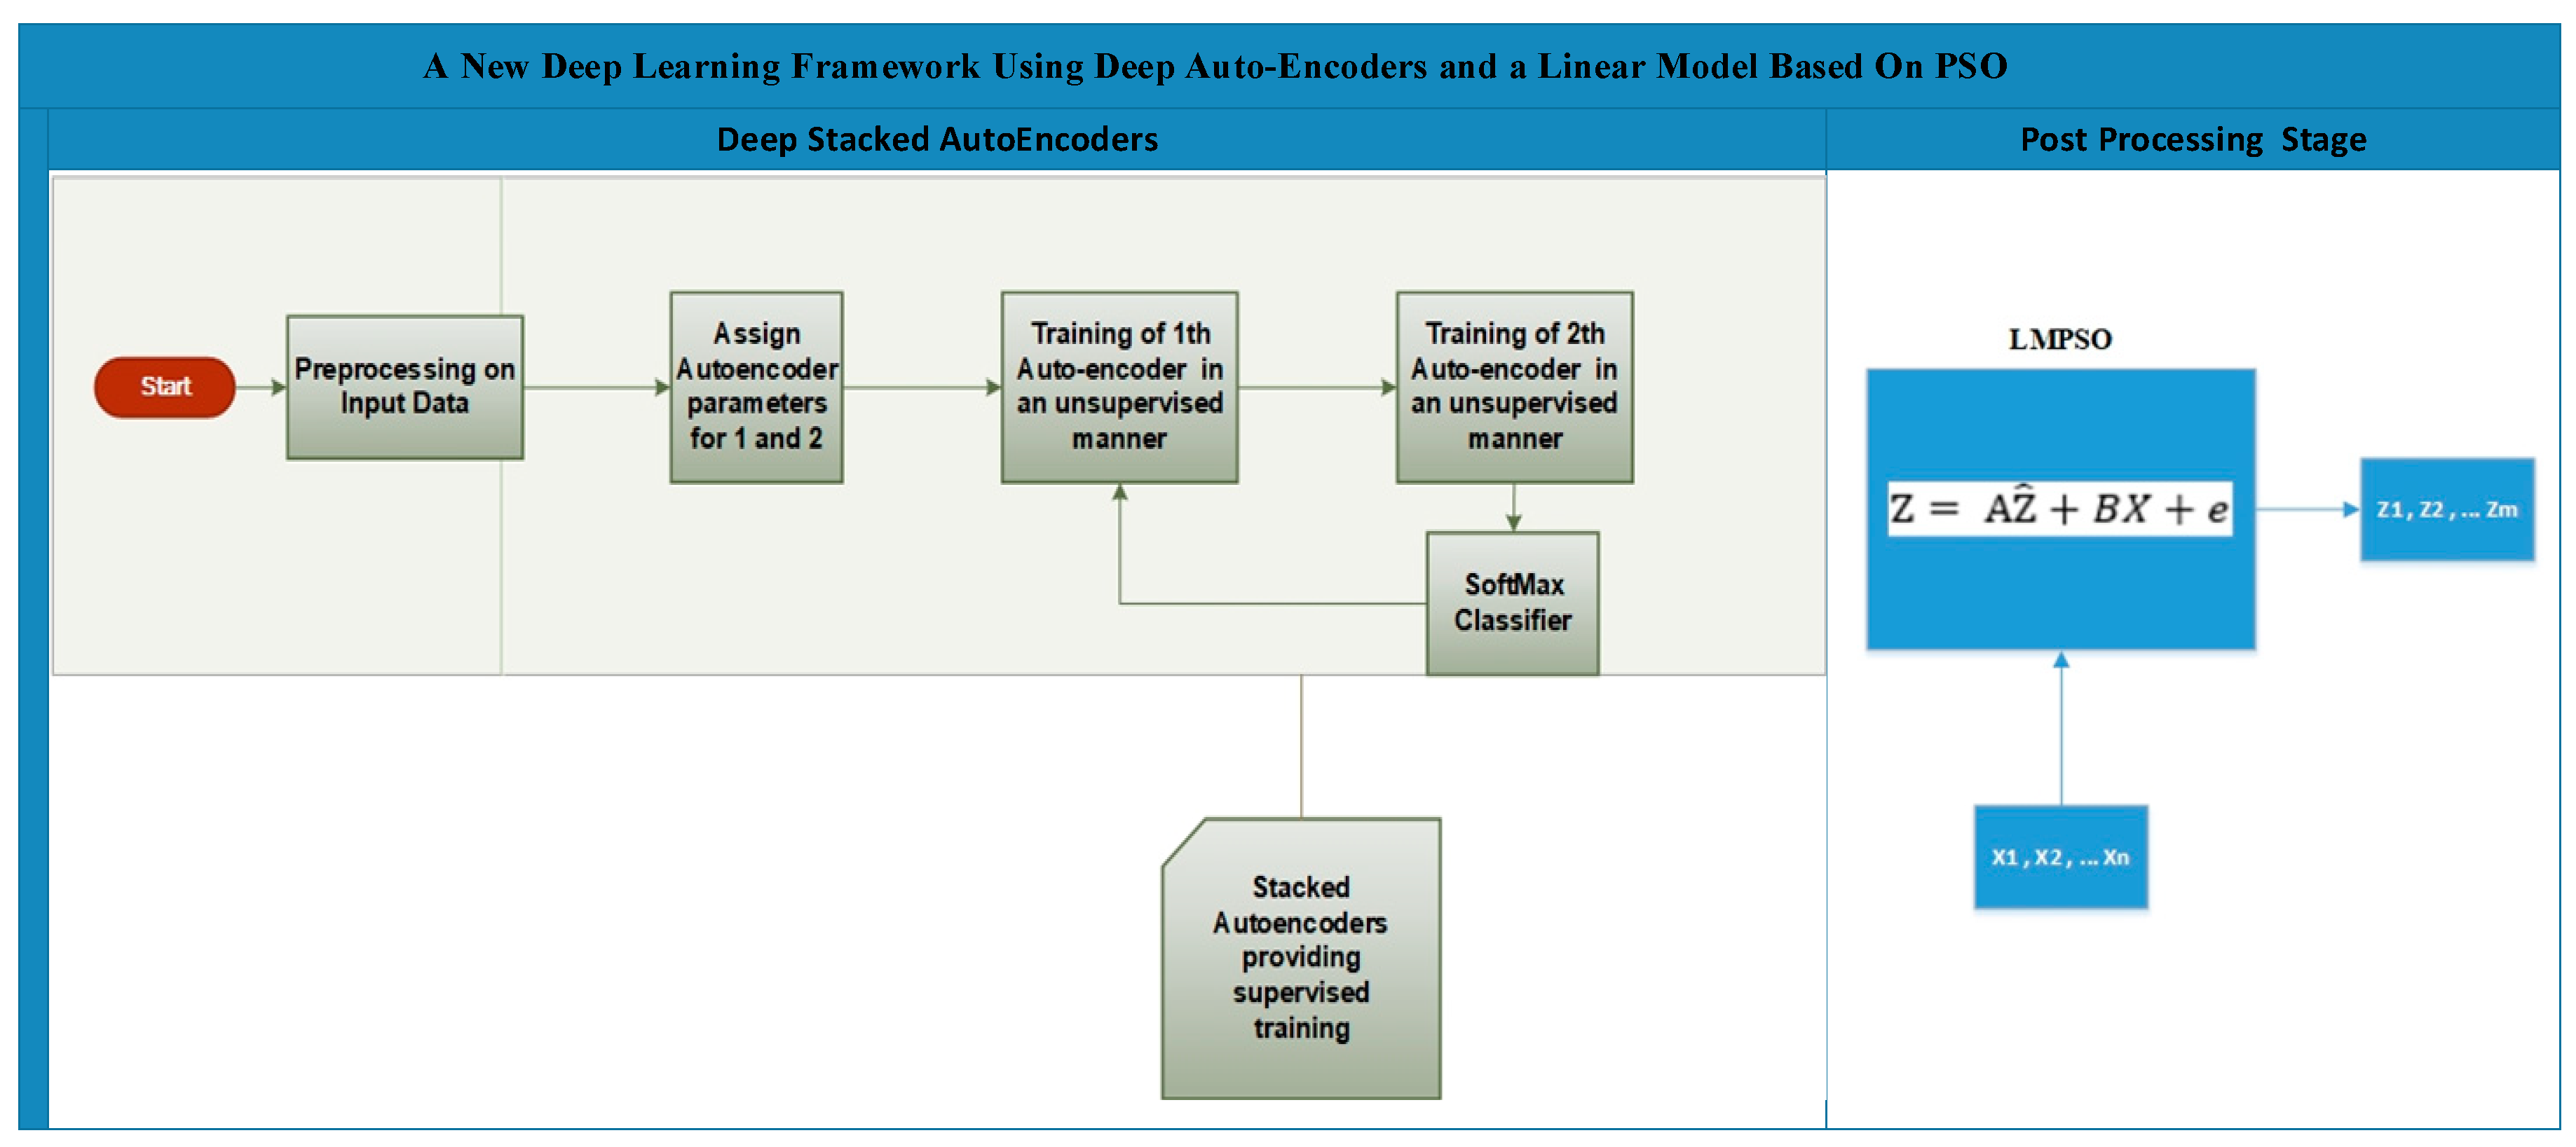 Sensors | Free Full-Text | A Novel Framework Using Deep Auto-Encoders Based  Linear Model for Data Classification